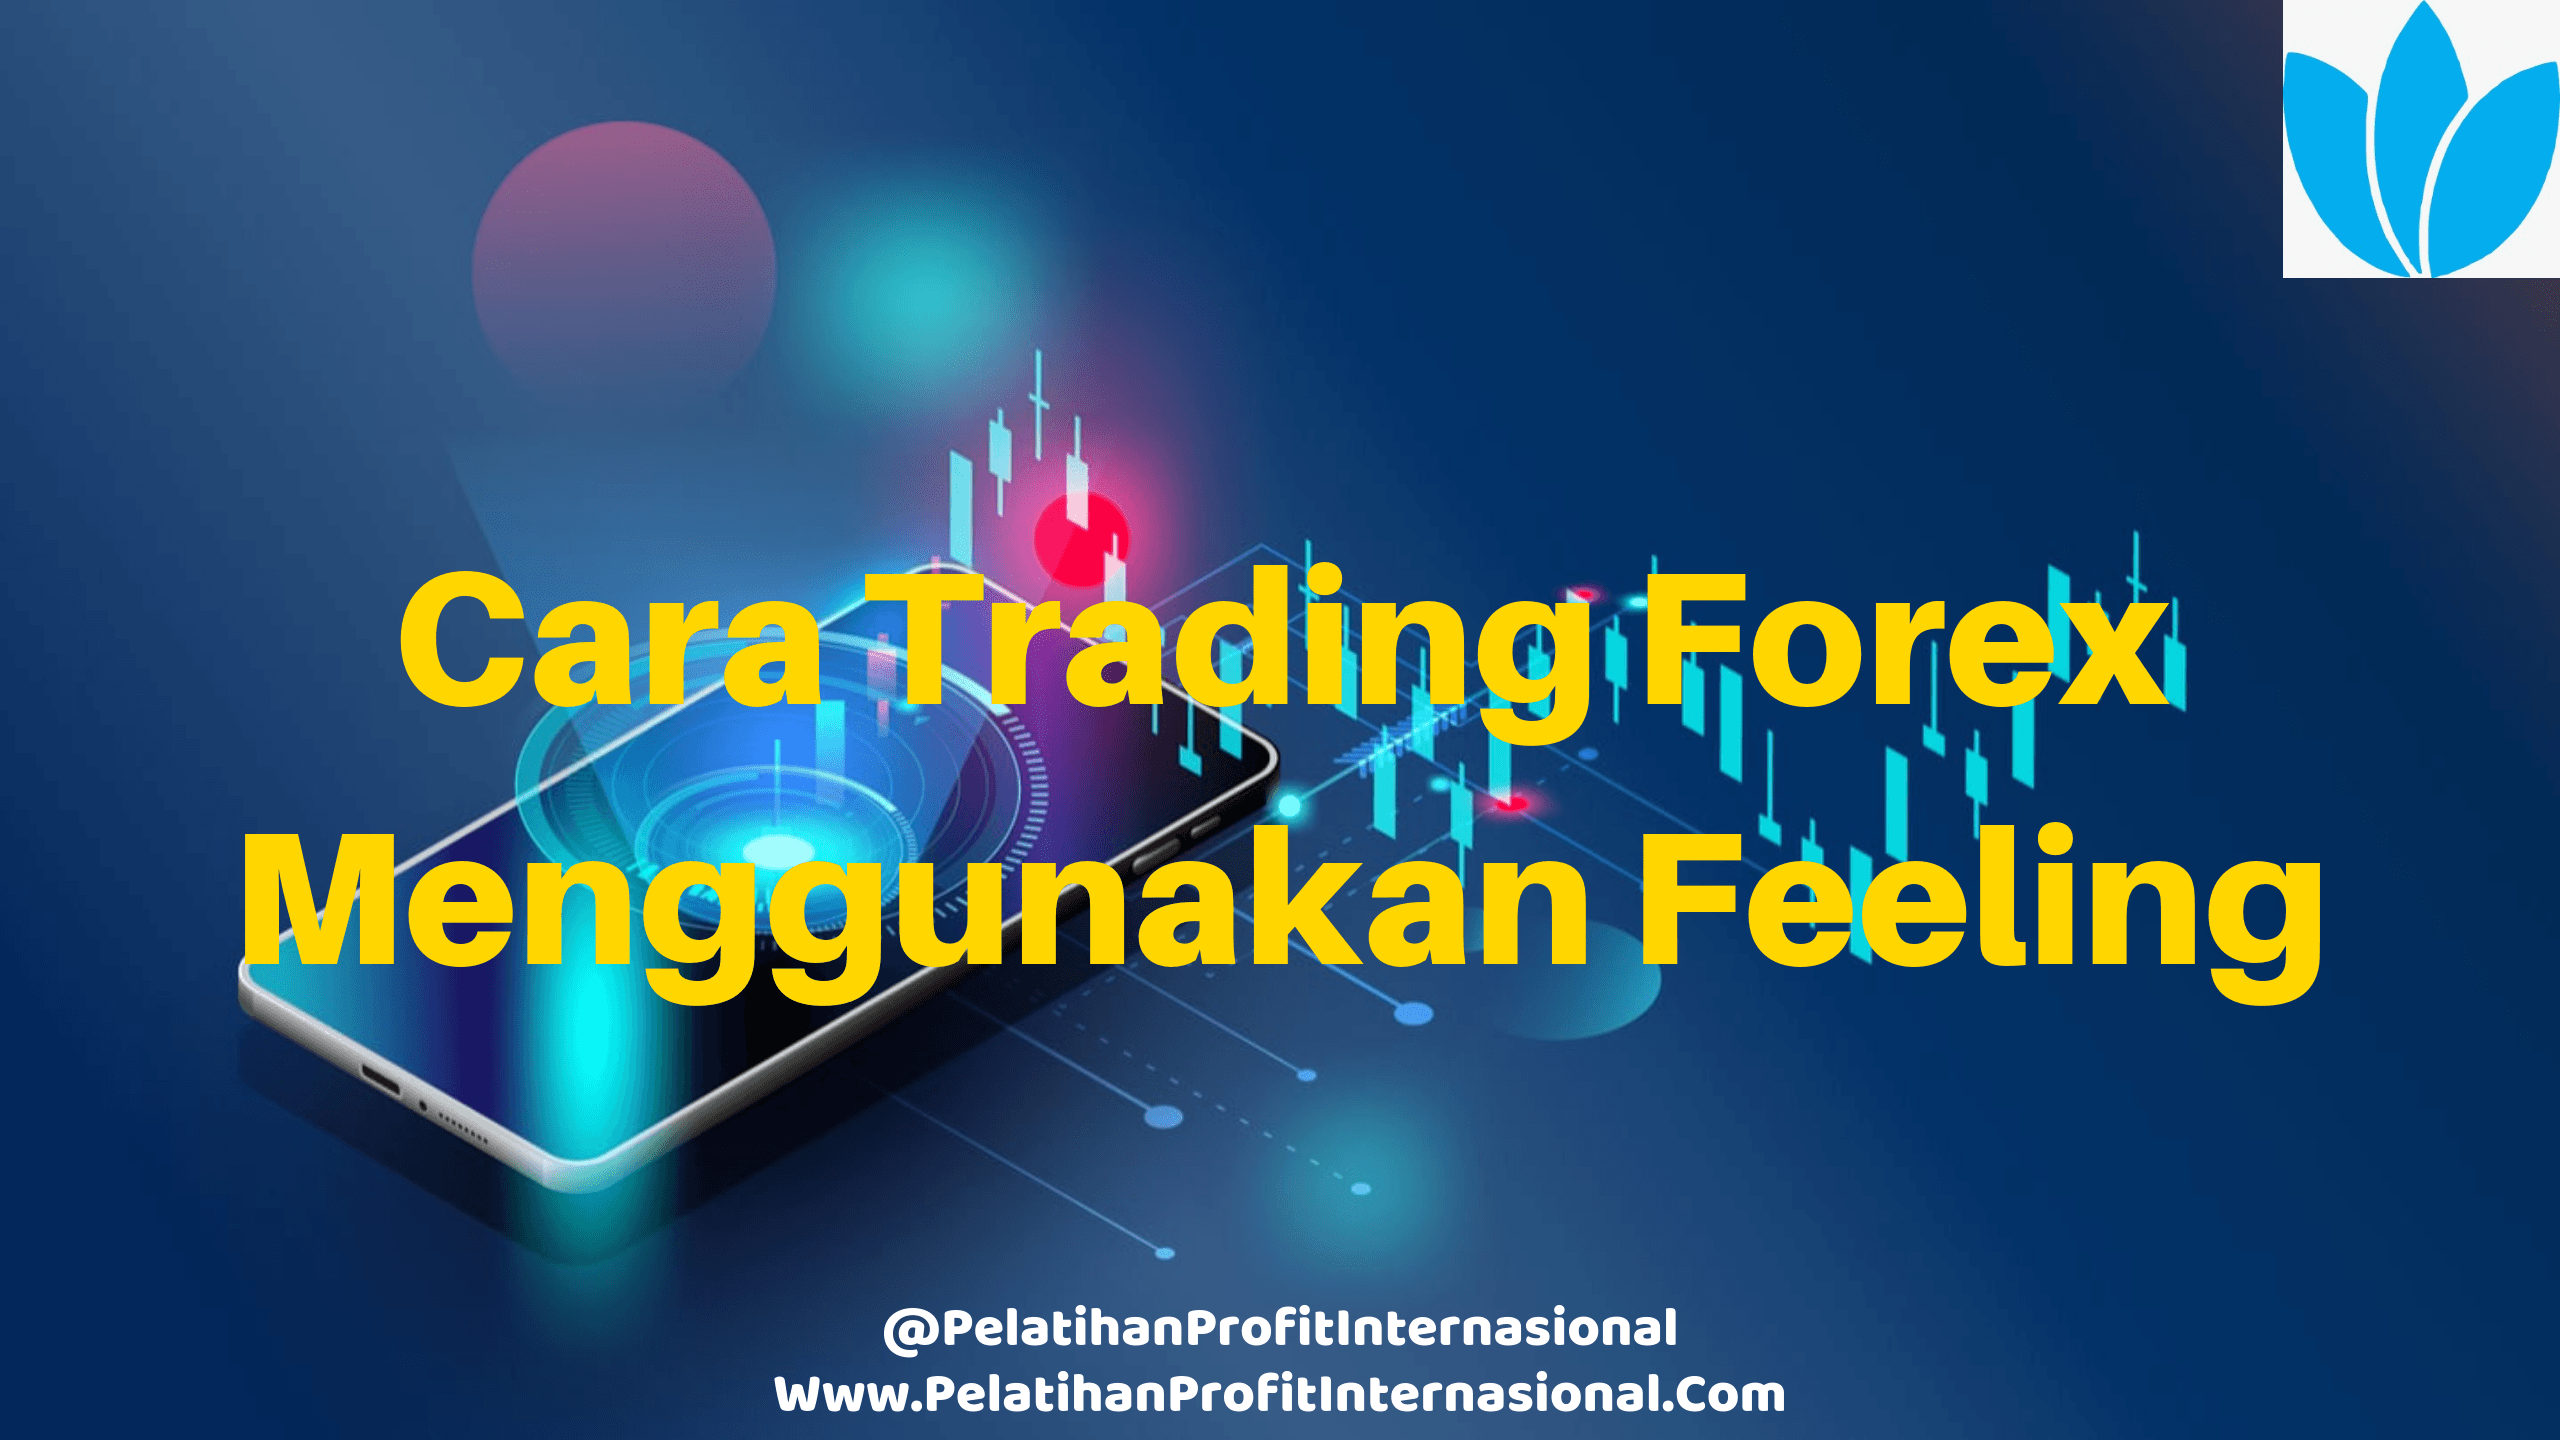 Cara trading forex menggunakan feeling | Pelatihan Profit Internasional